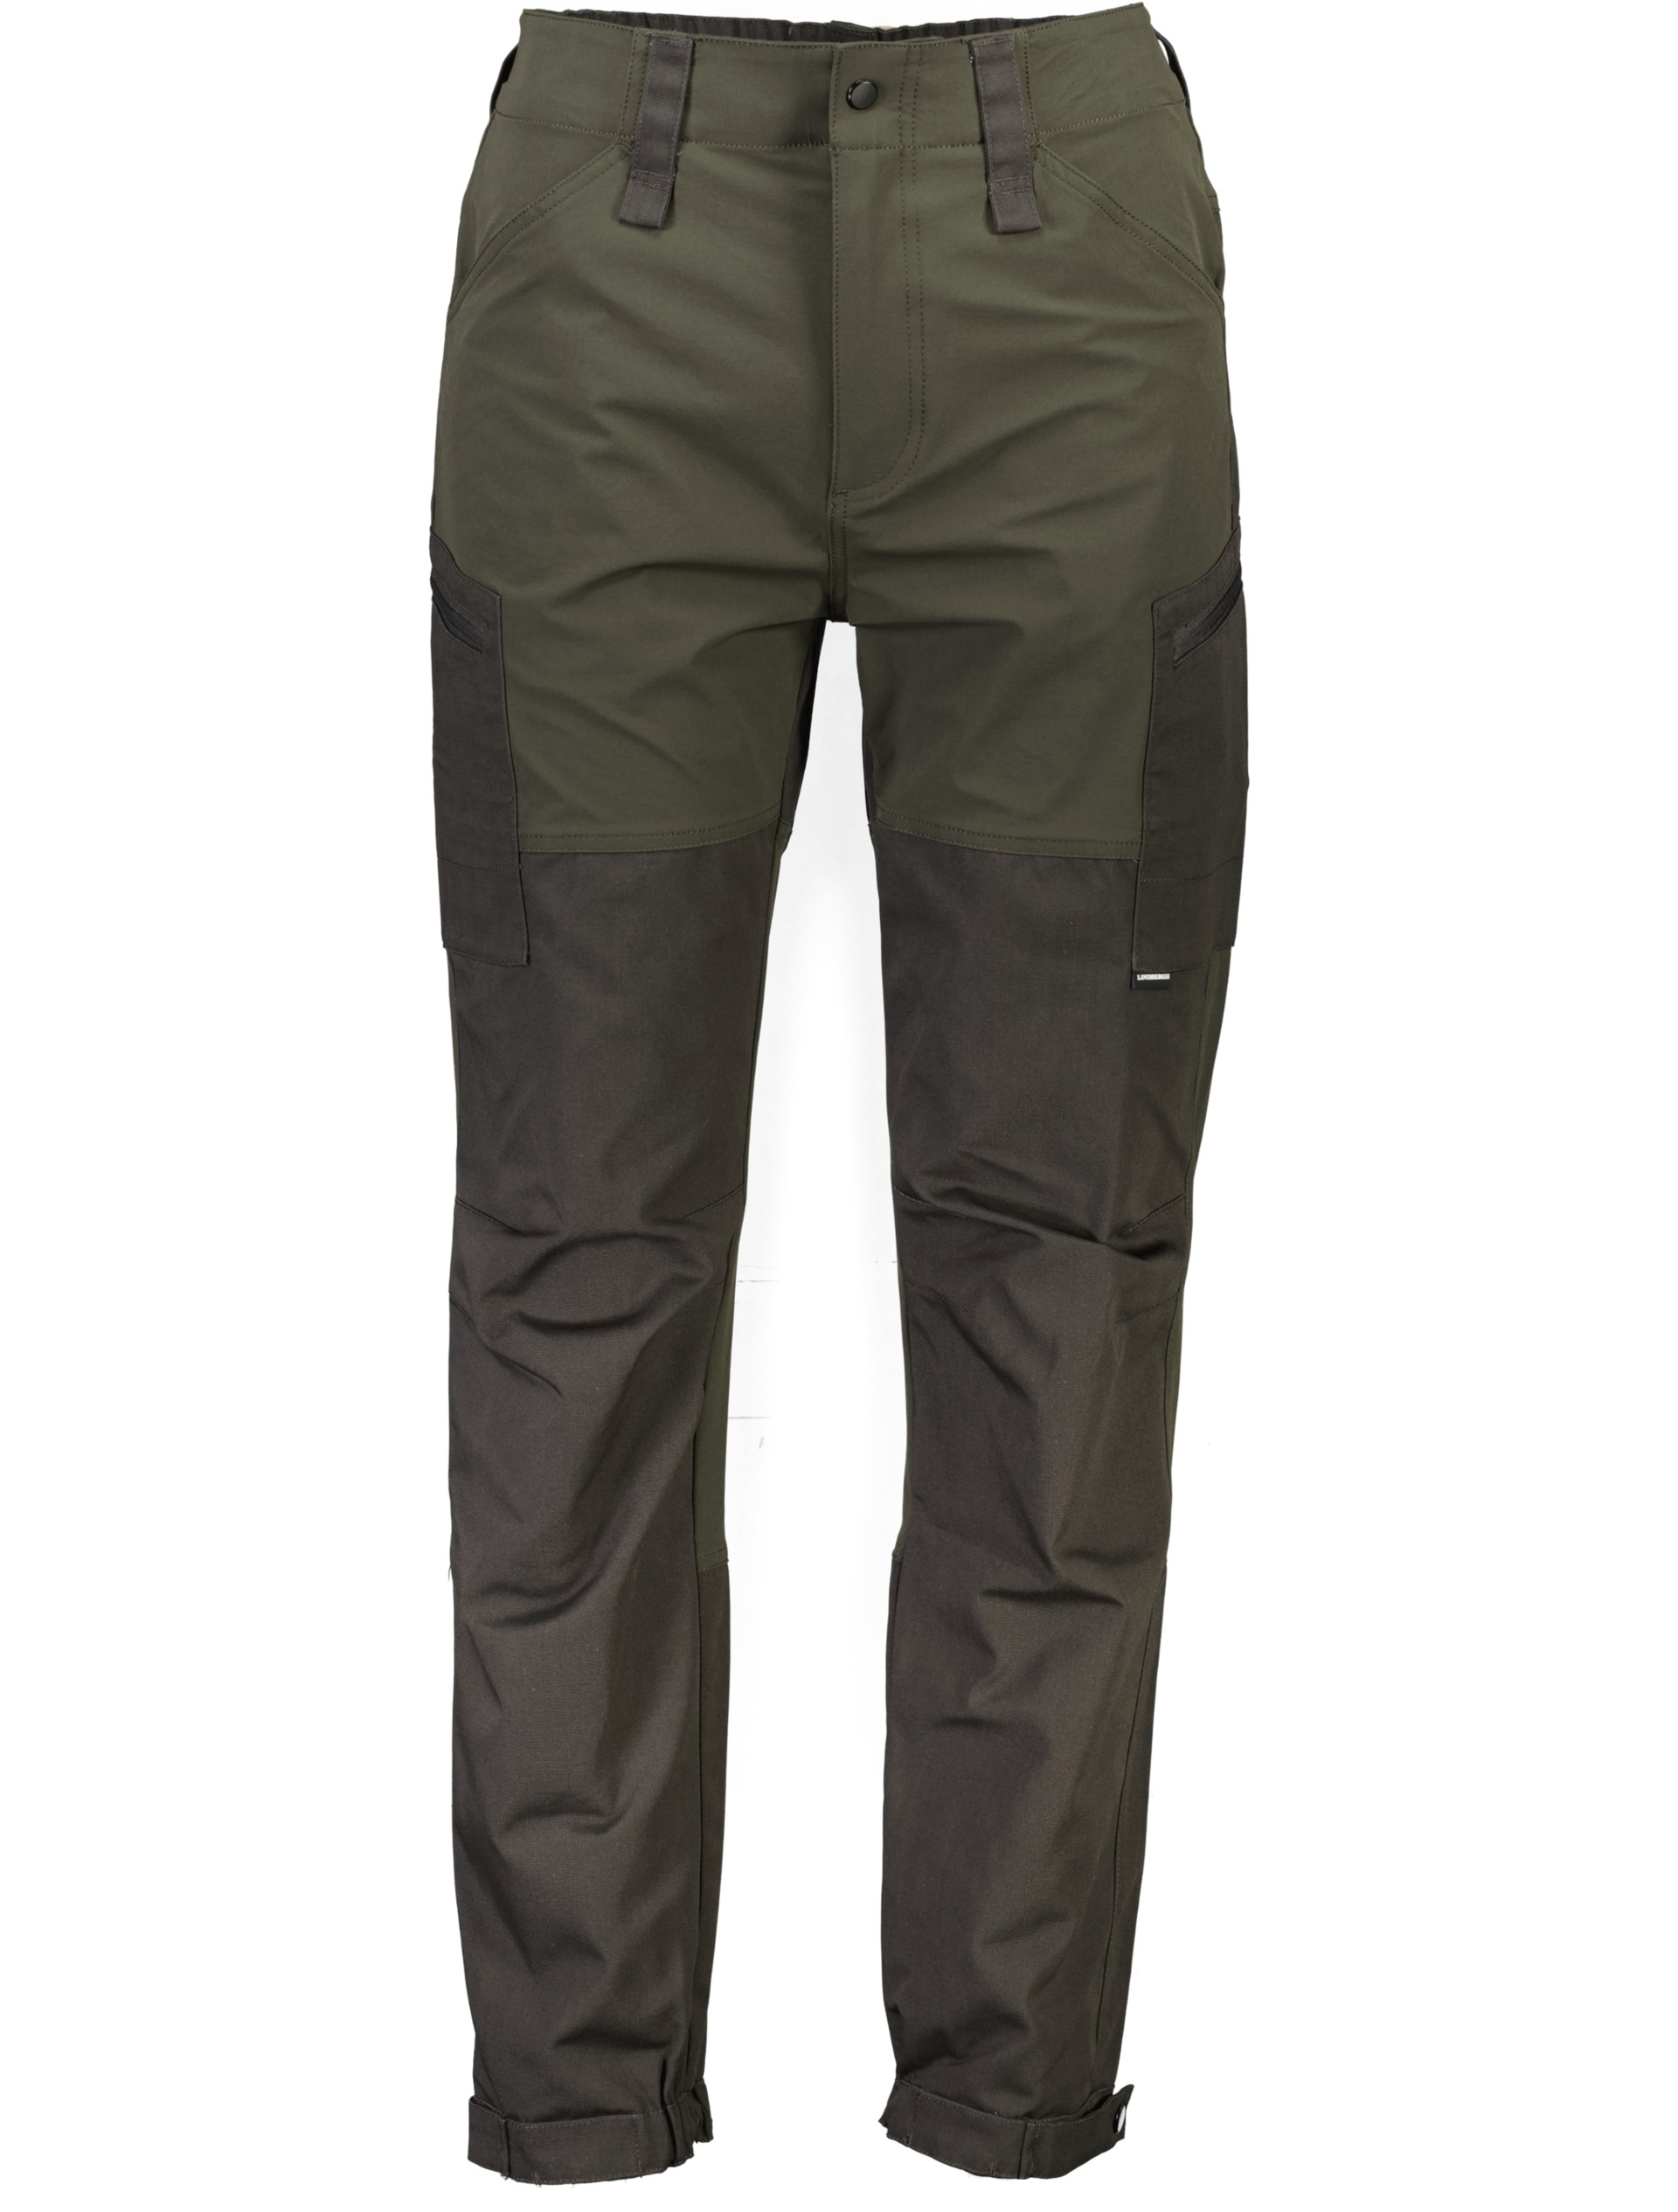 Lindbergh Casual pants green / army